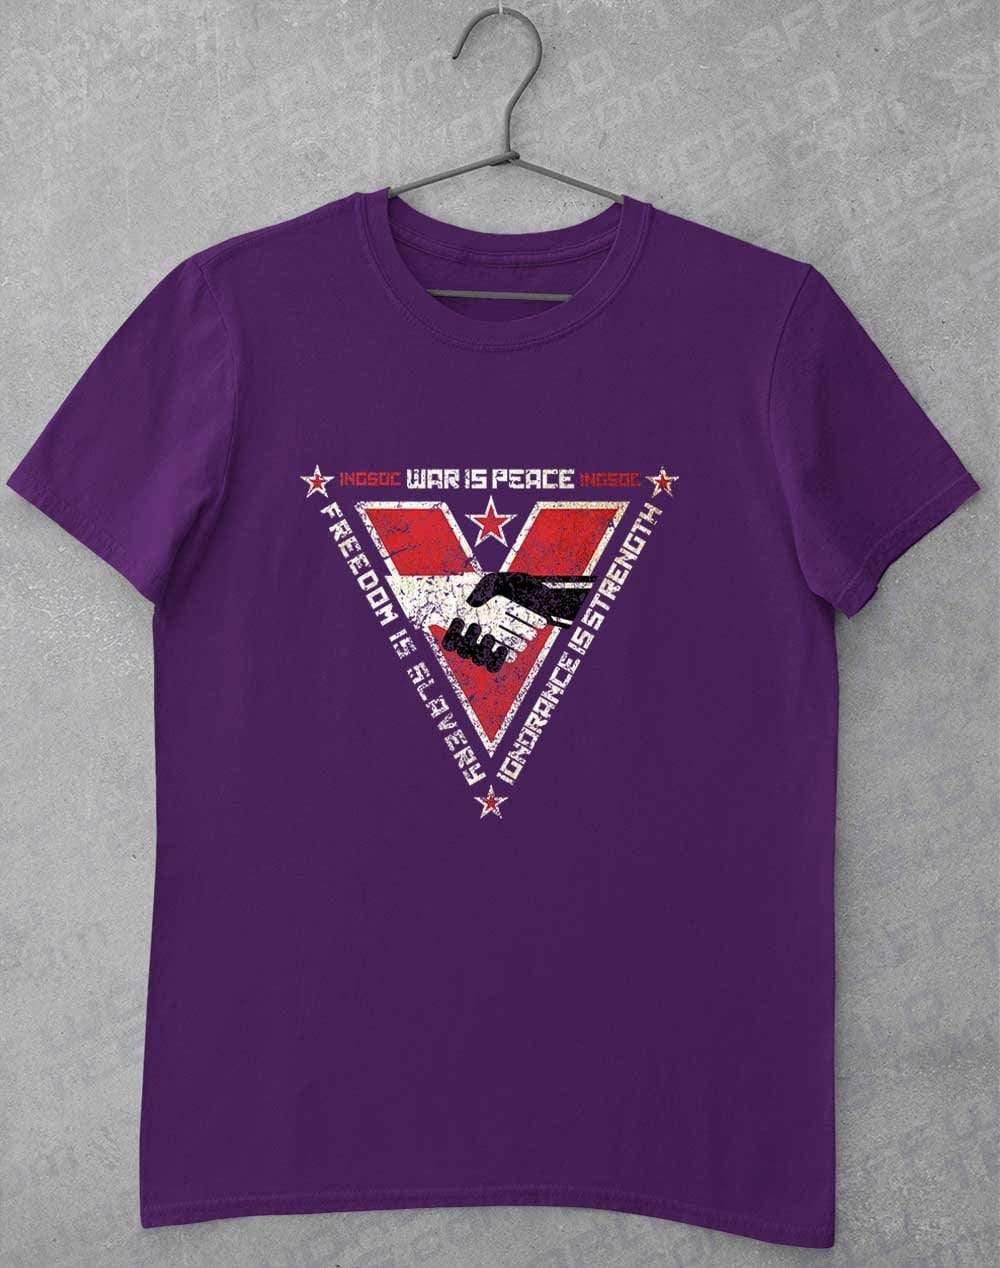 INGSOC Triangular Slogans T-Shirt S / Purple  - Off World Tees